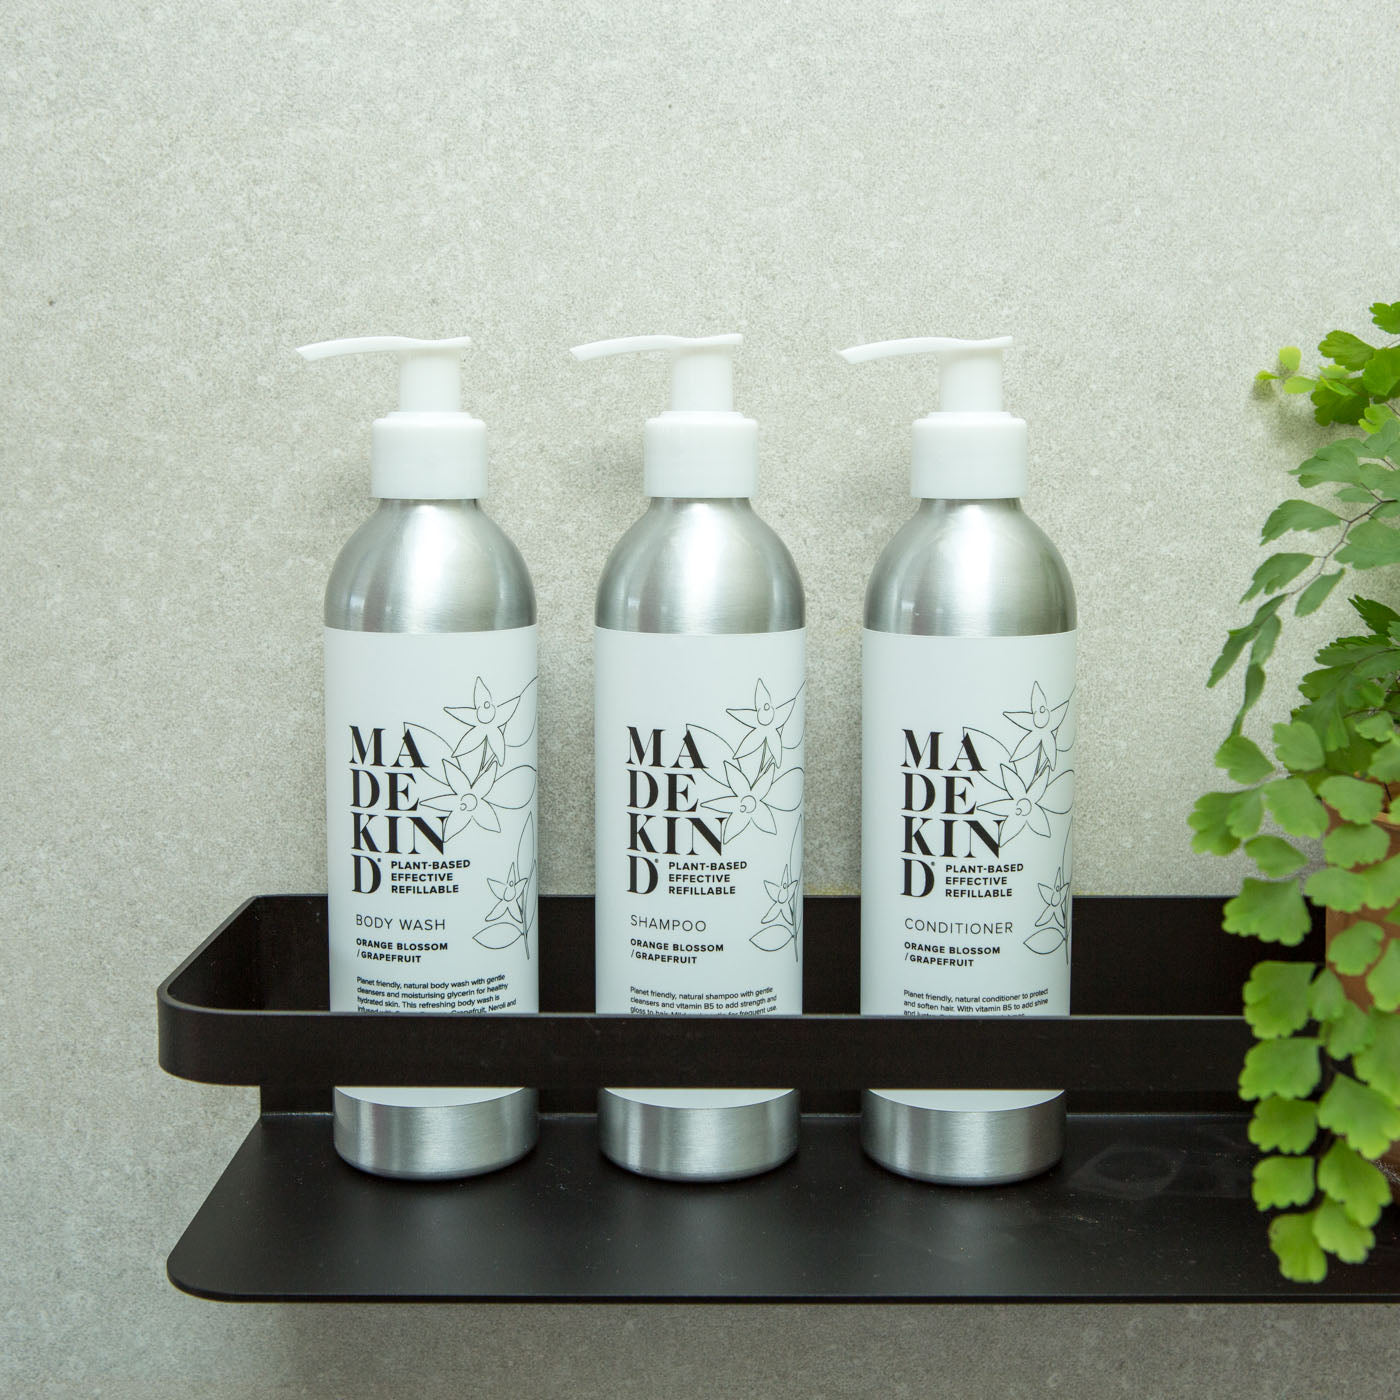 Madekind natural Body wash, lavender & geranium scented shower gel